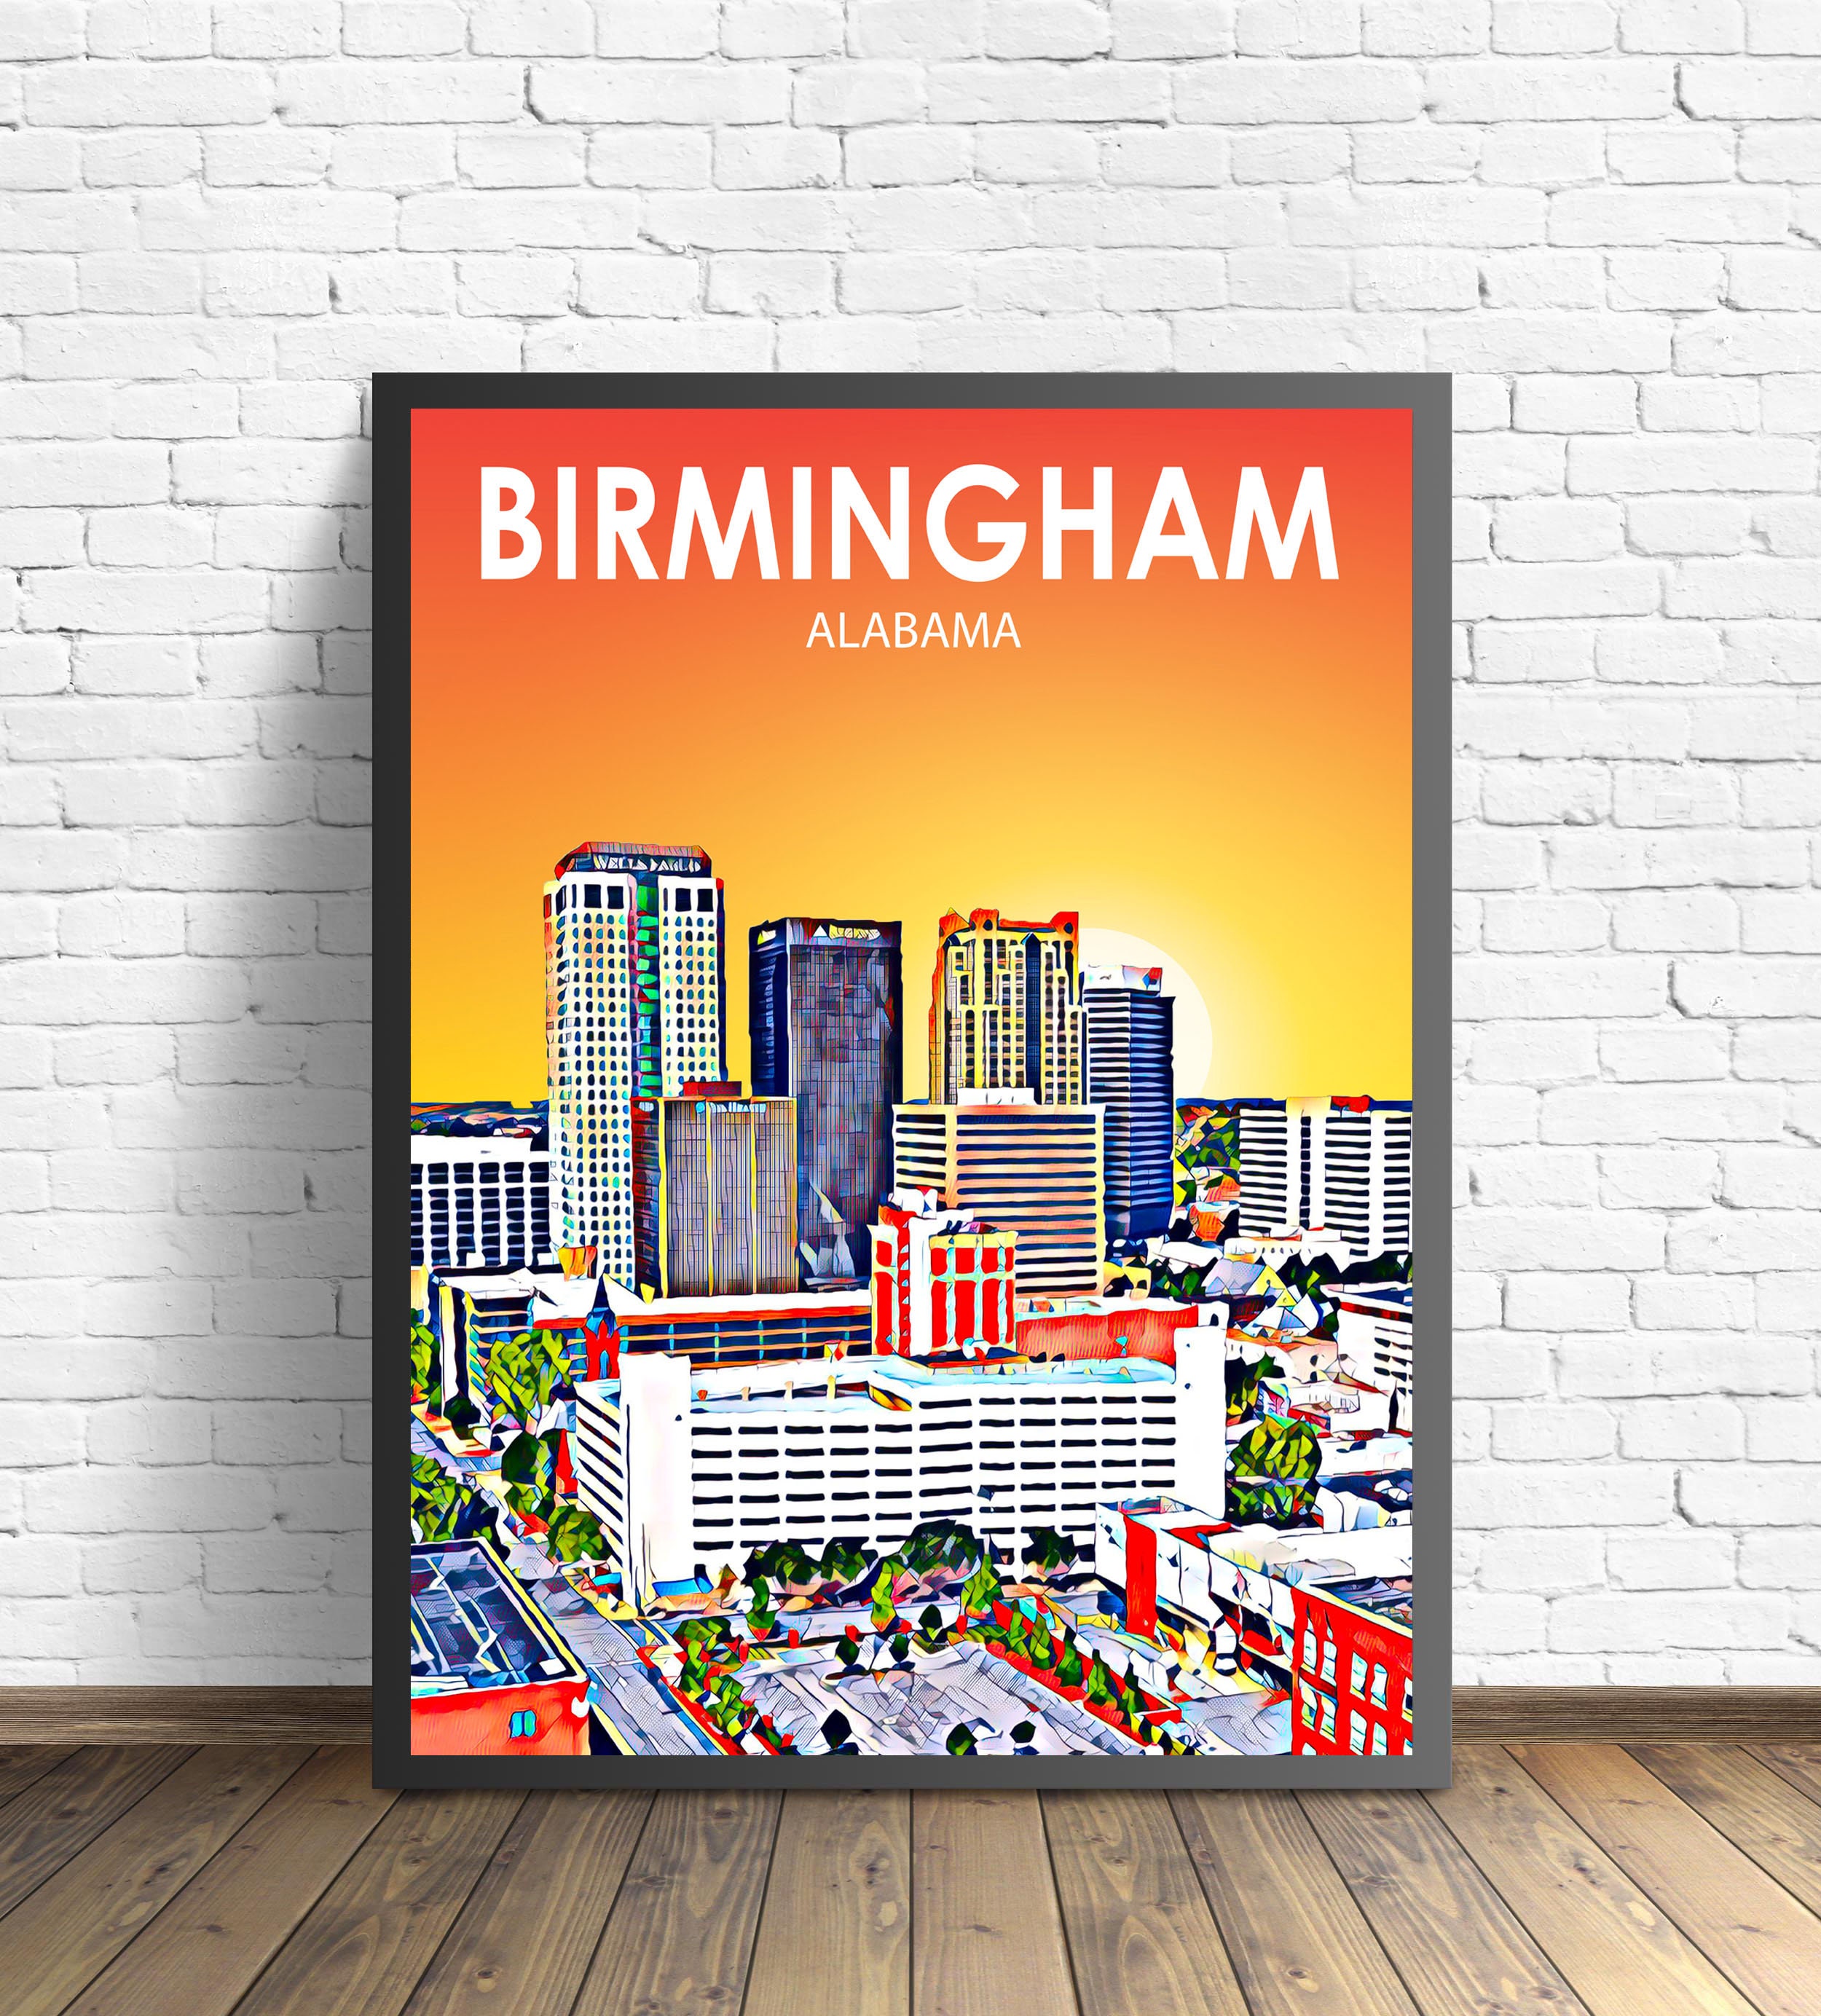 Birmingham Alabama Art Poster Sunset / Night Landscape Poster